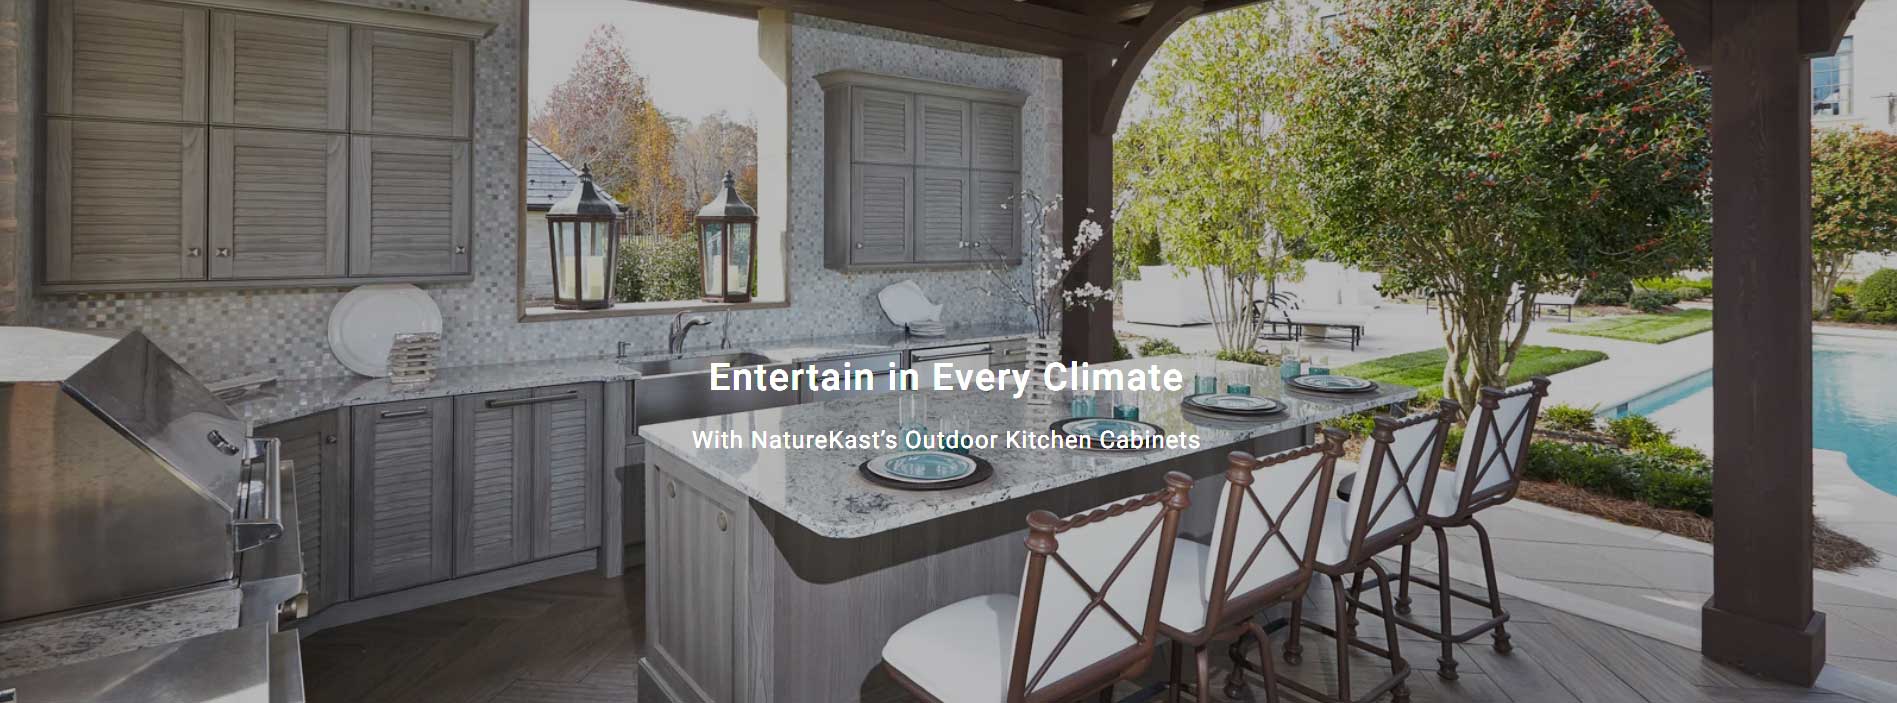 Kamloops Urban Cabinets Naturecast Outdoor Kitchen Cabinets-v3